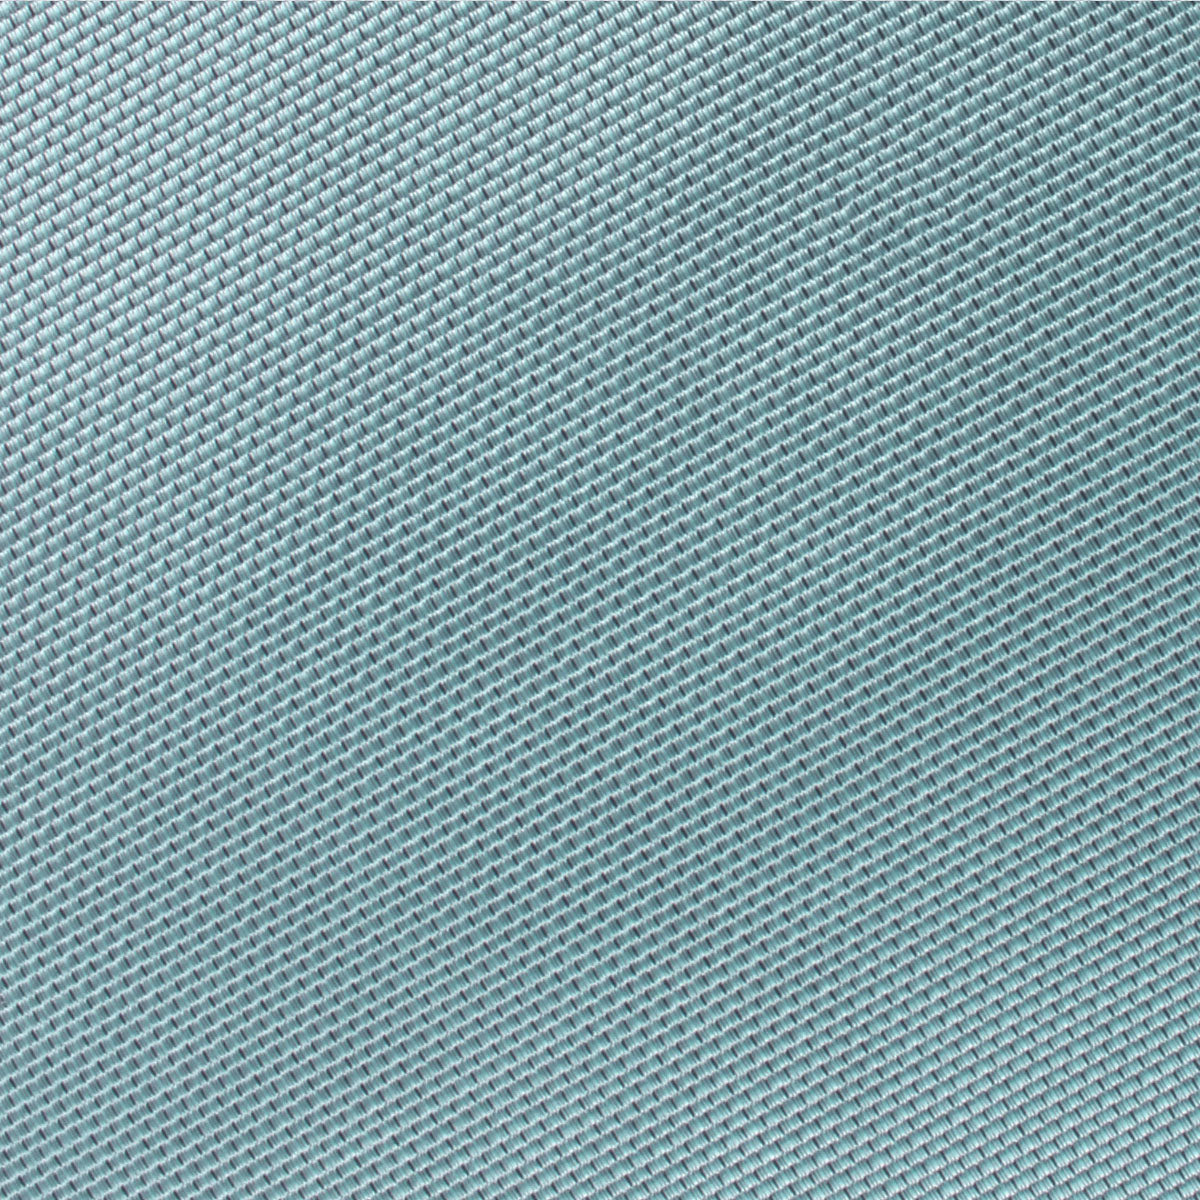 Turkish Teal Blue Weave Skinny Tie Fabric